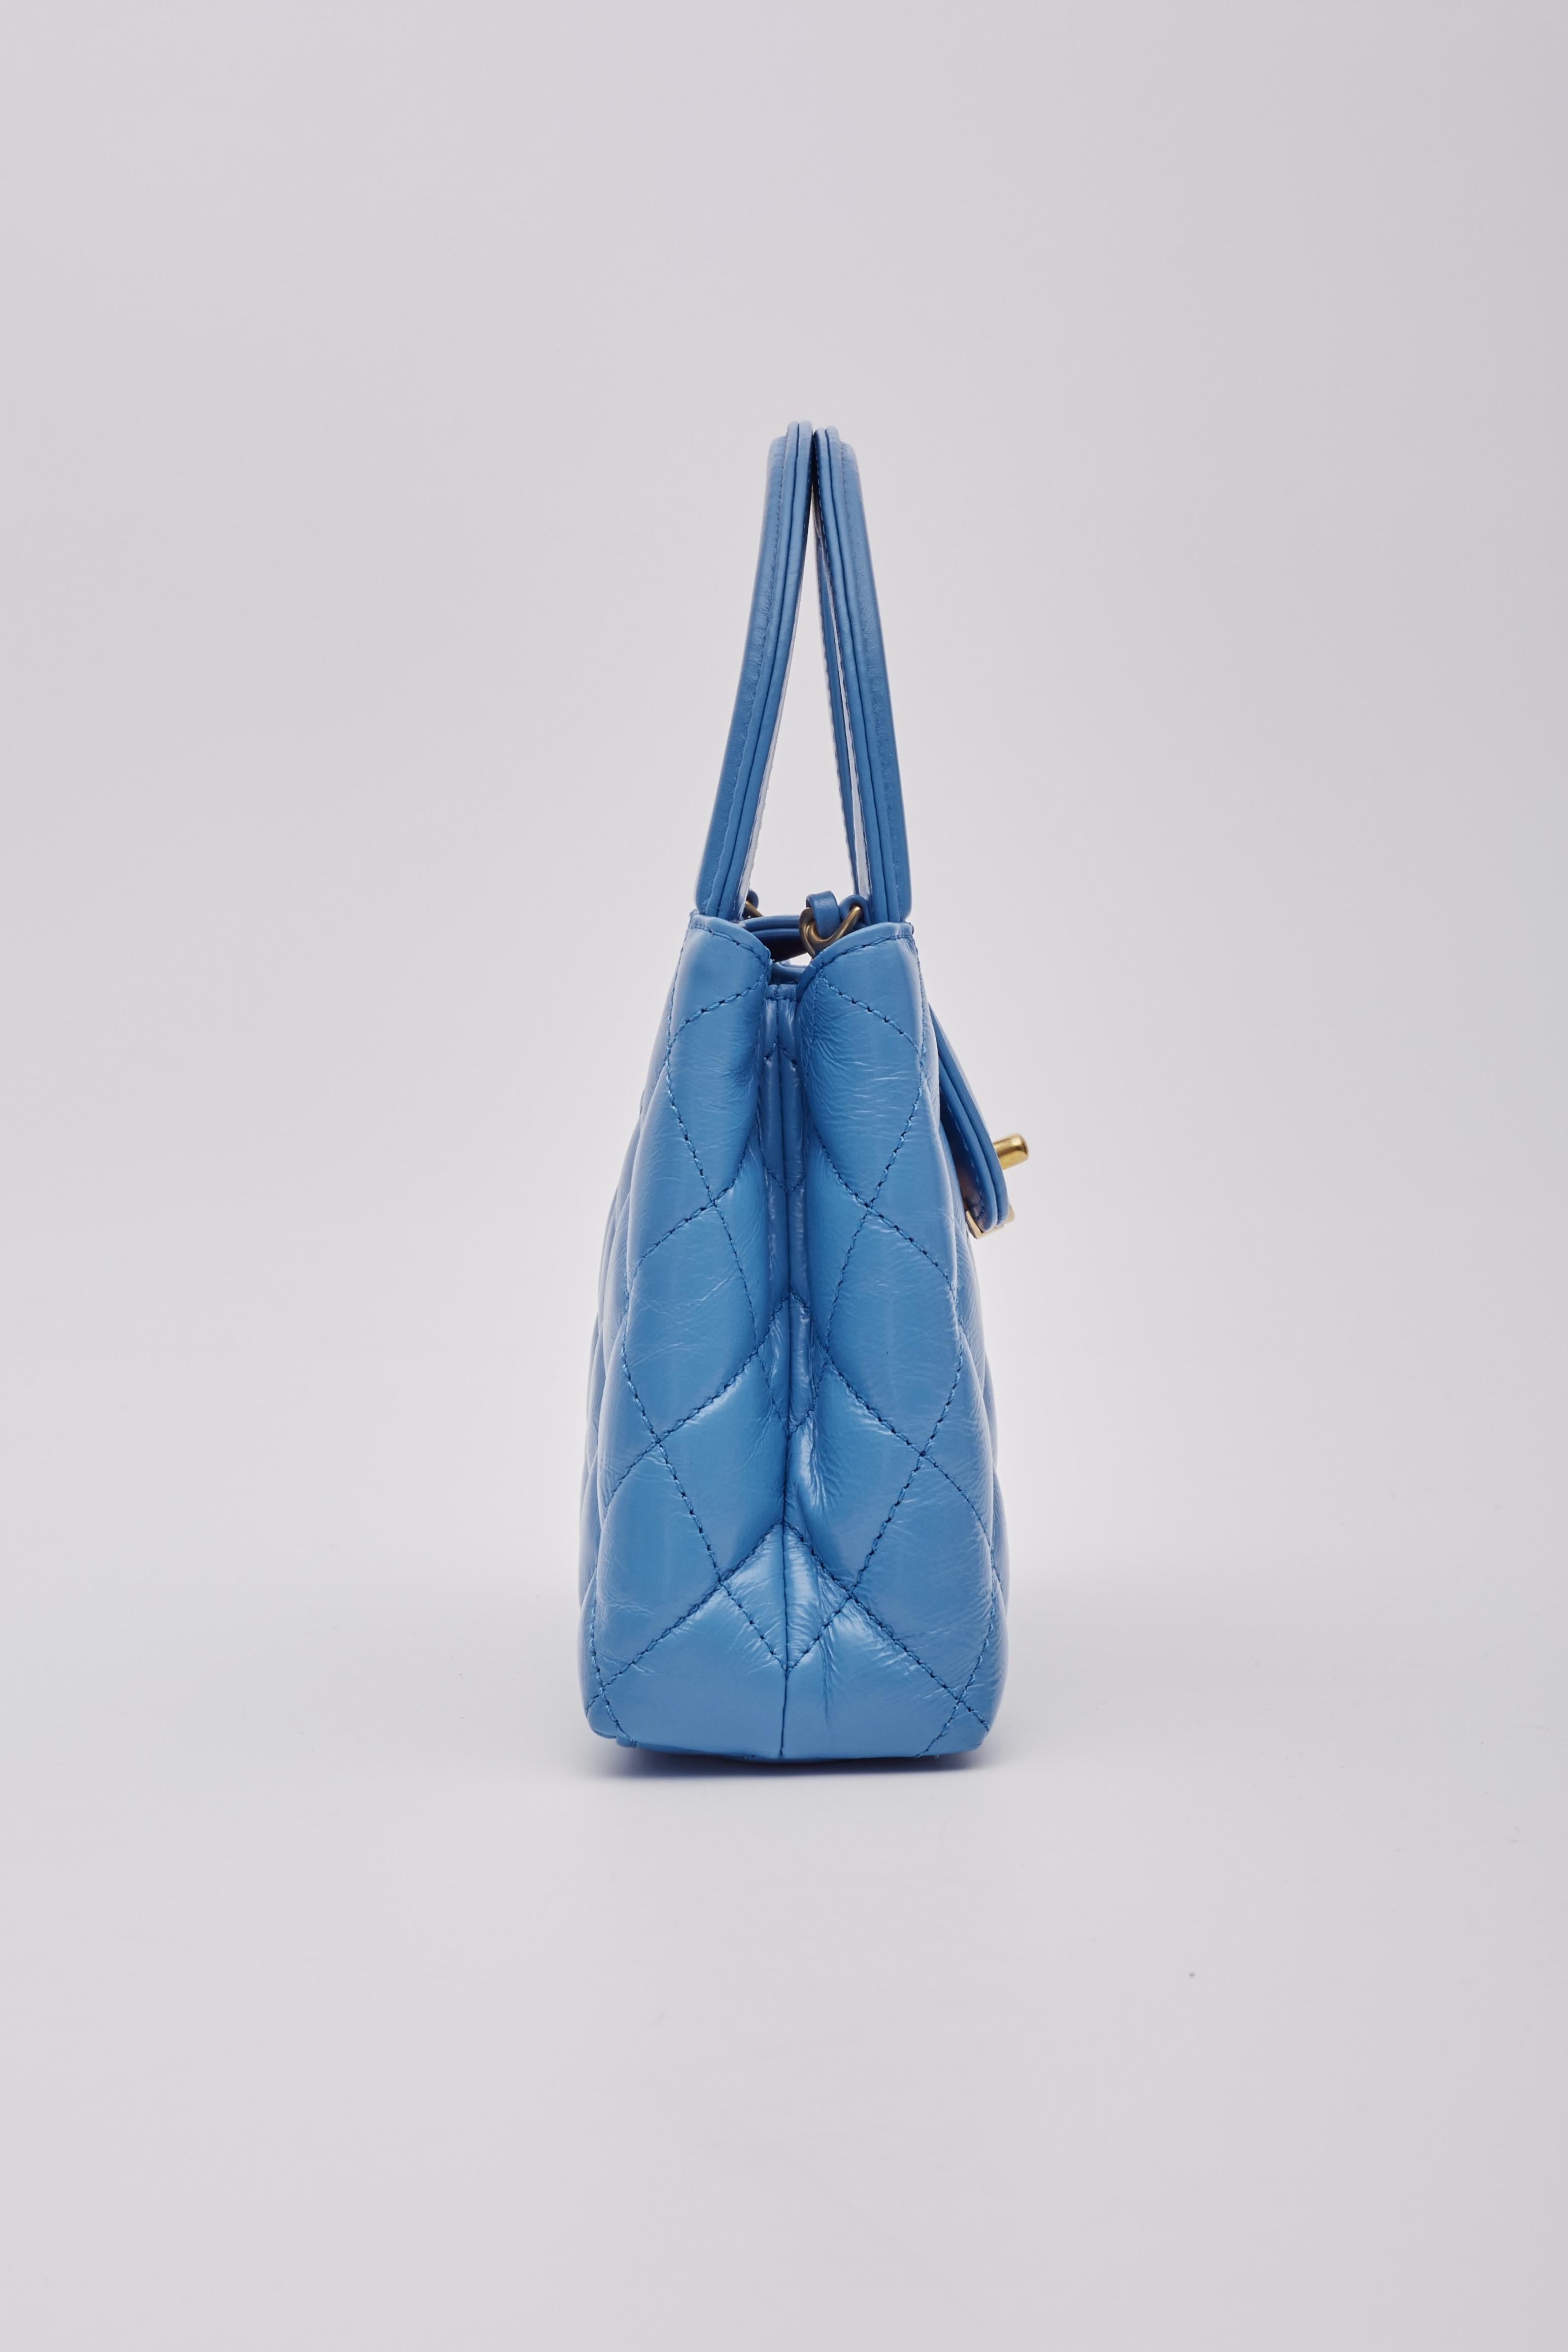 Chanel Blue Calfskin Mini Shopping Kelly Bag For Sale 1